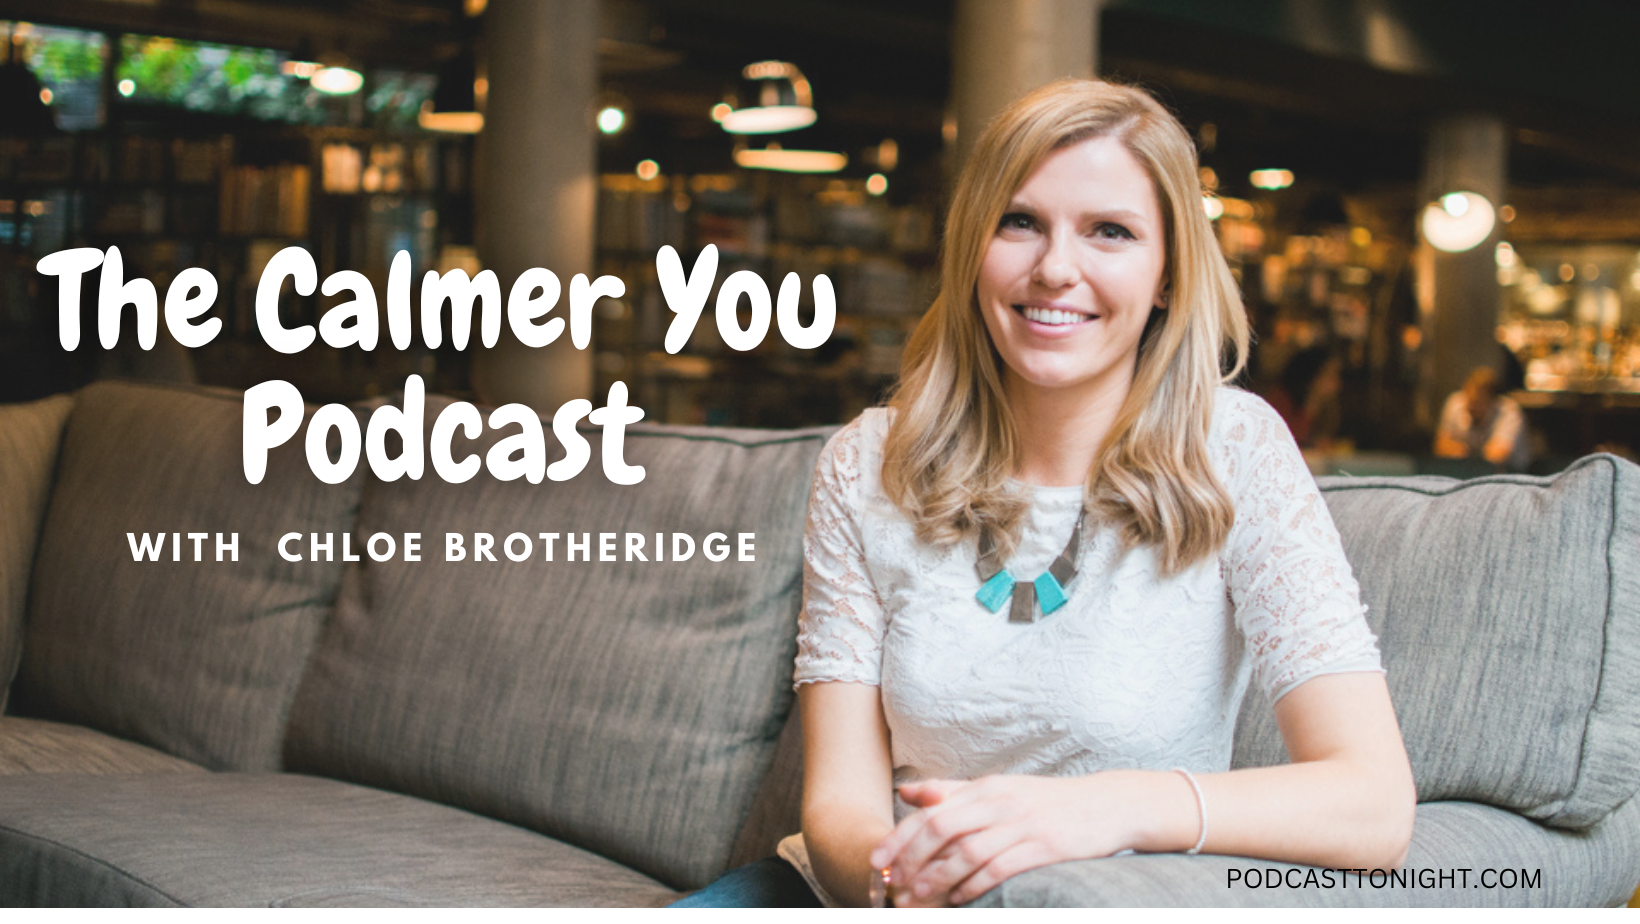 The Calmer You Podcast – Listen Here